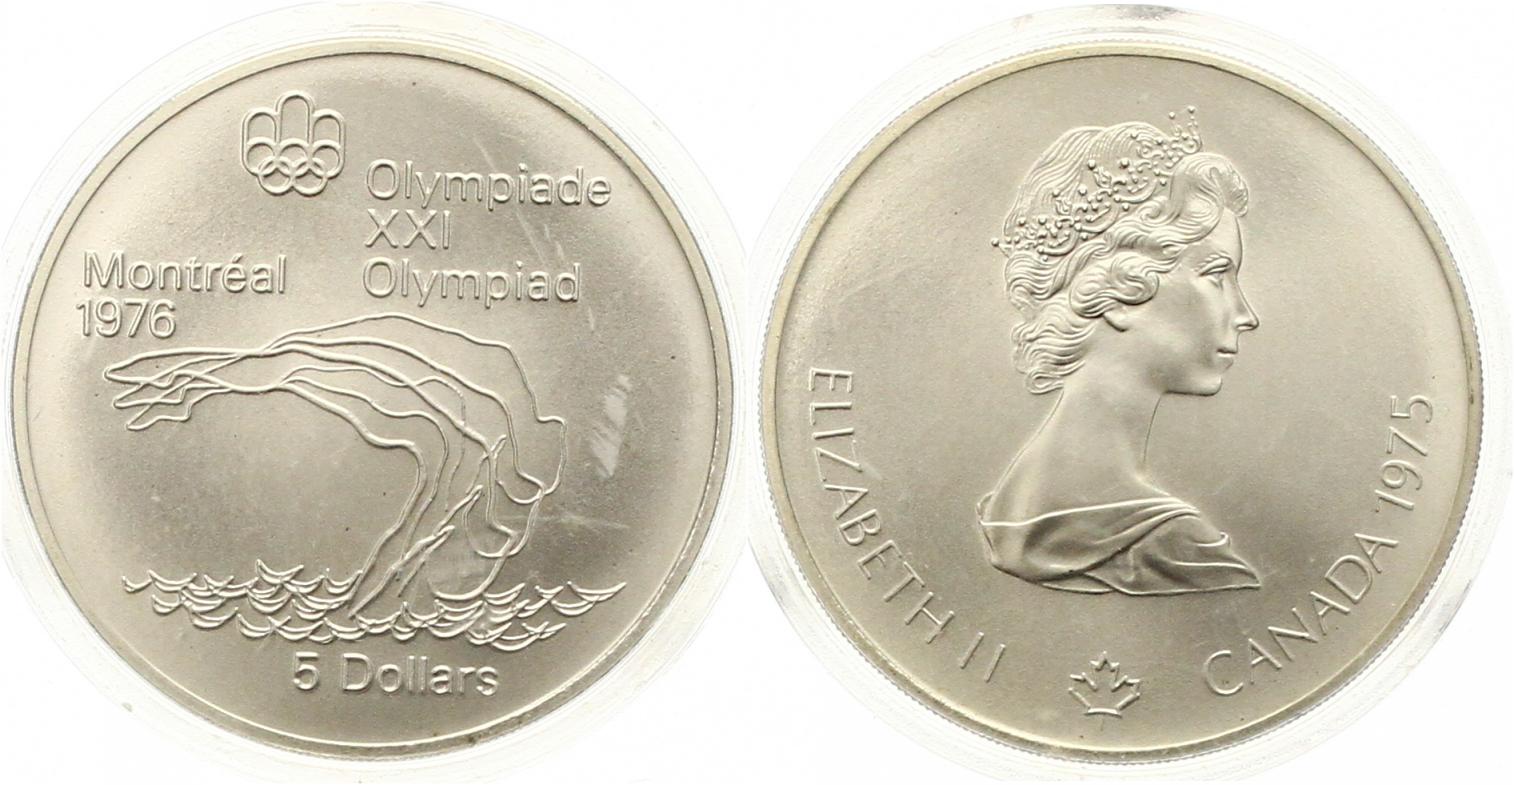  796 Kanada 5  Dollar Olympiade 1975 Silber 22,4 g. Fein Stempelglanz   